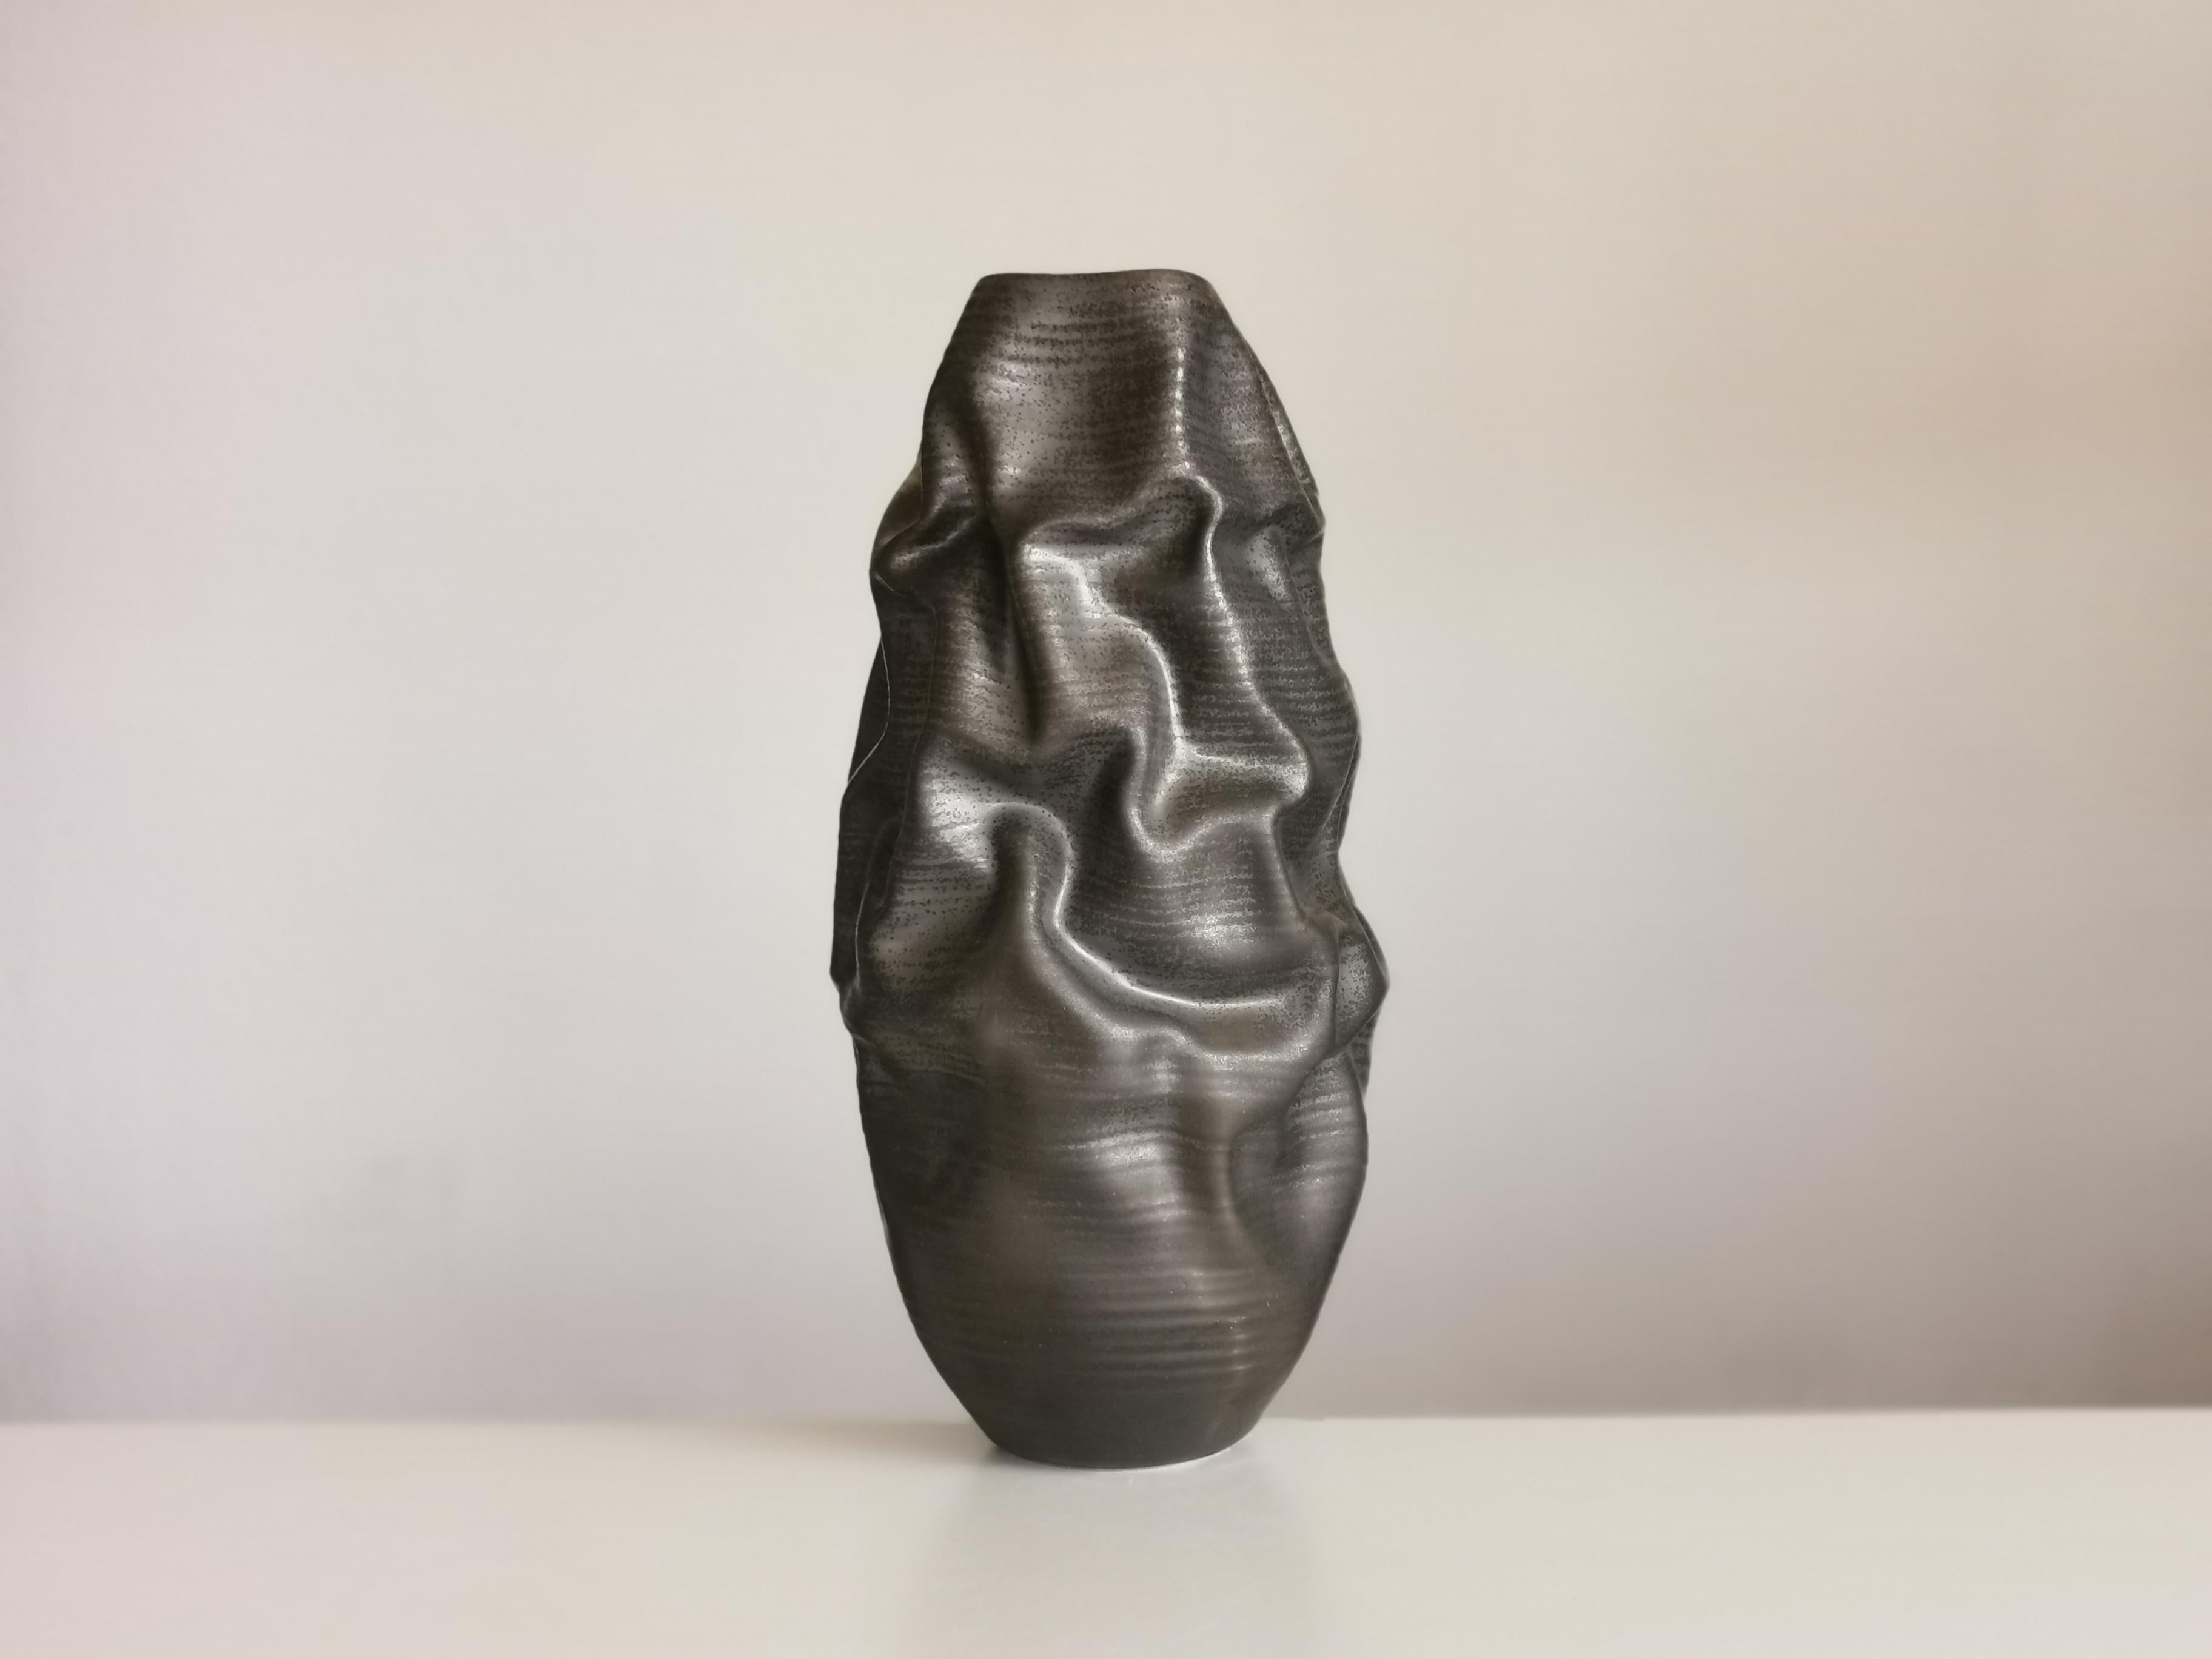 Pair of Unique Ceramic Sculptures Vessels 'Water Spirits' Objet d'Art 1